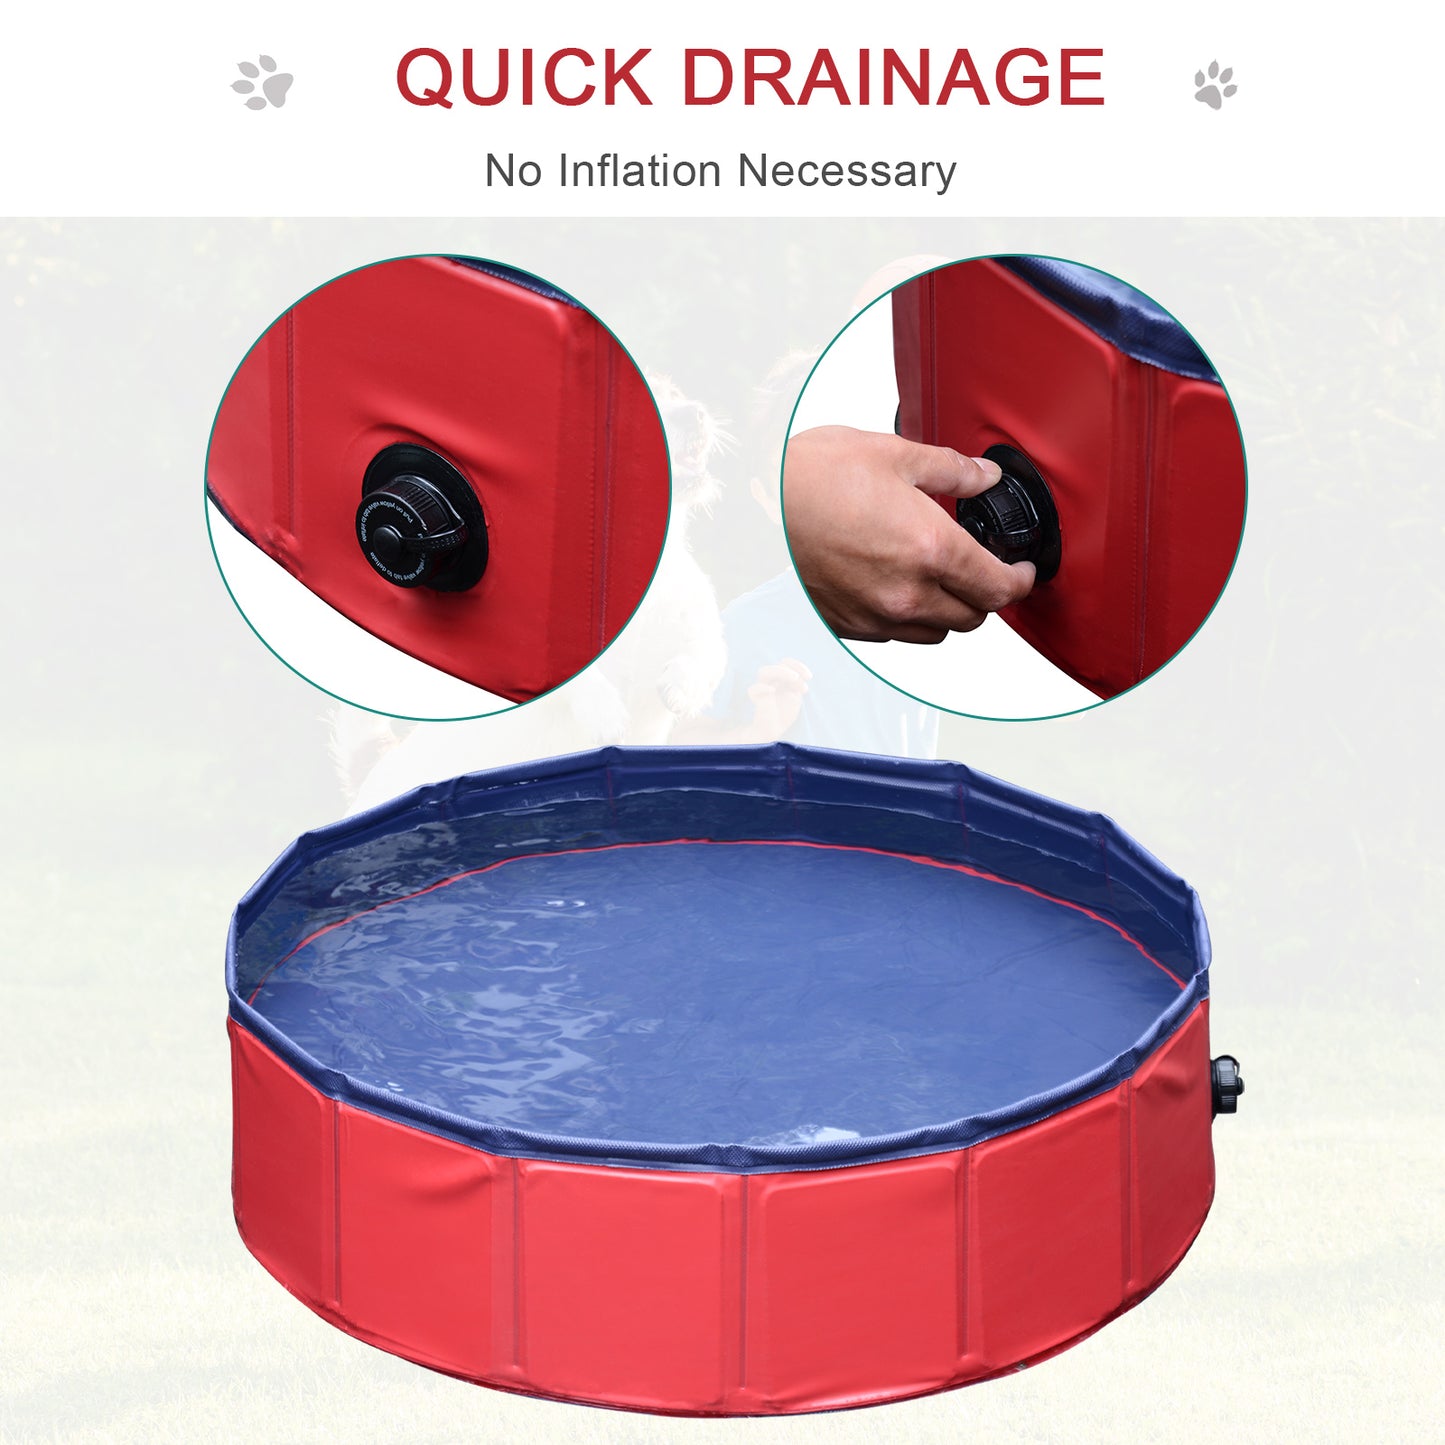 PawHut Pet Swimming Pool, Foldable, 80 cm Diameter-Red